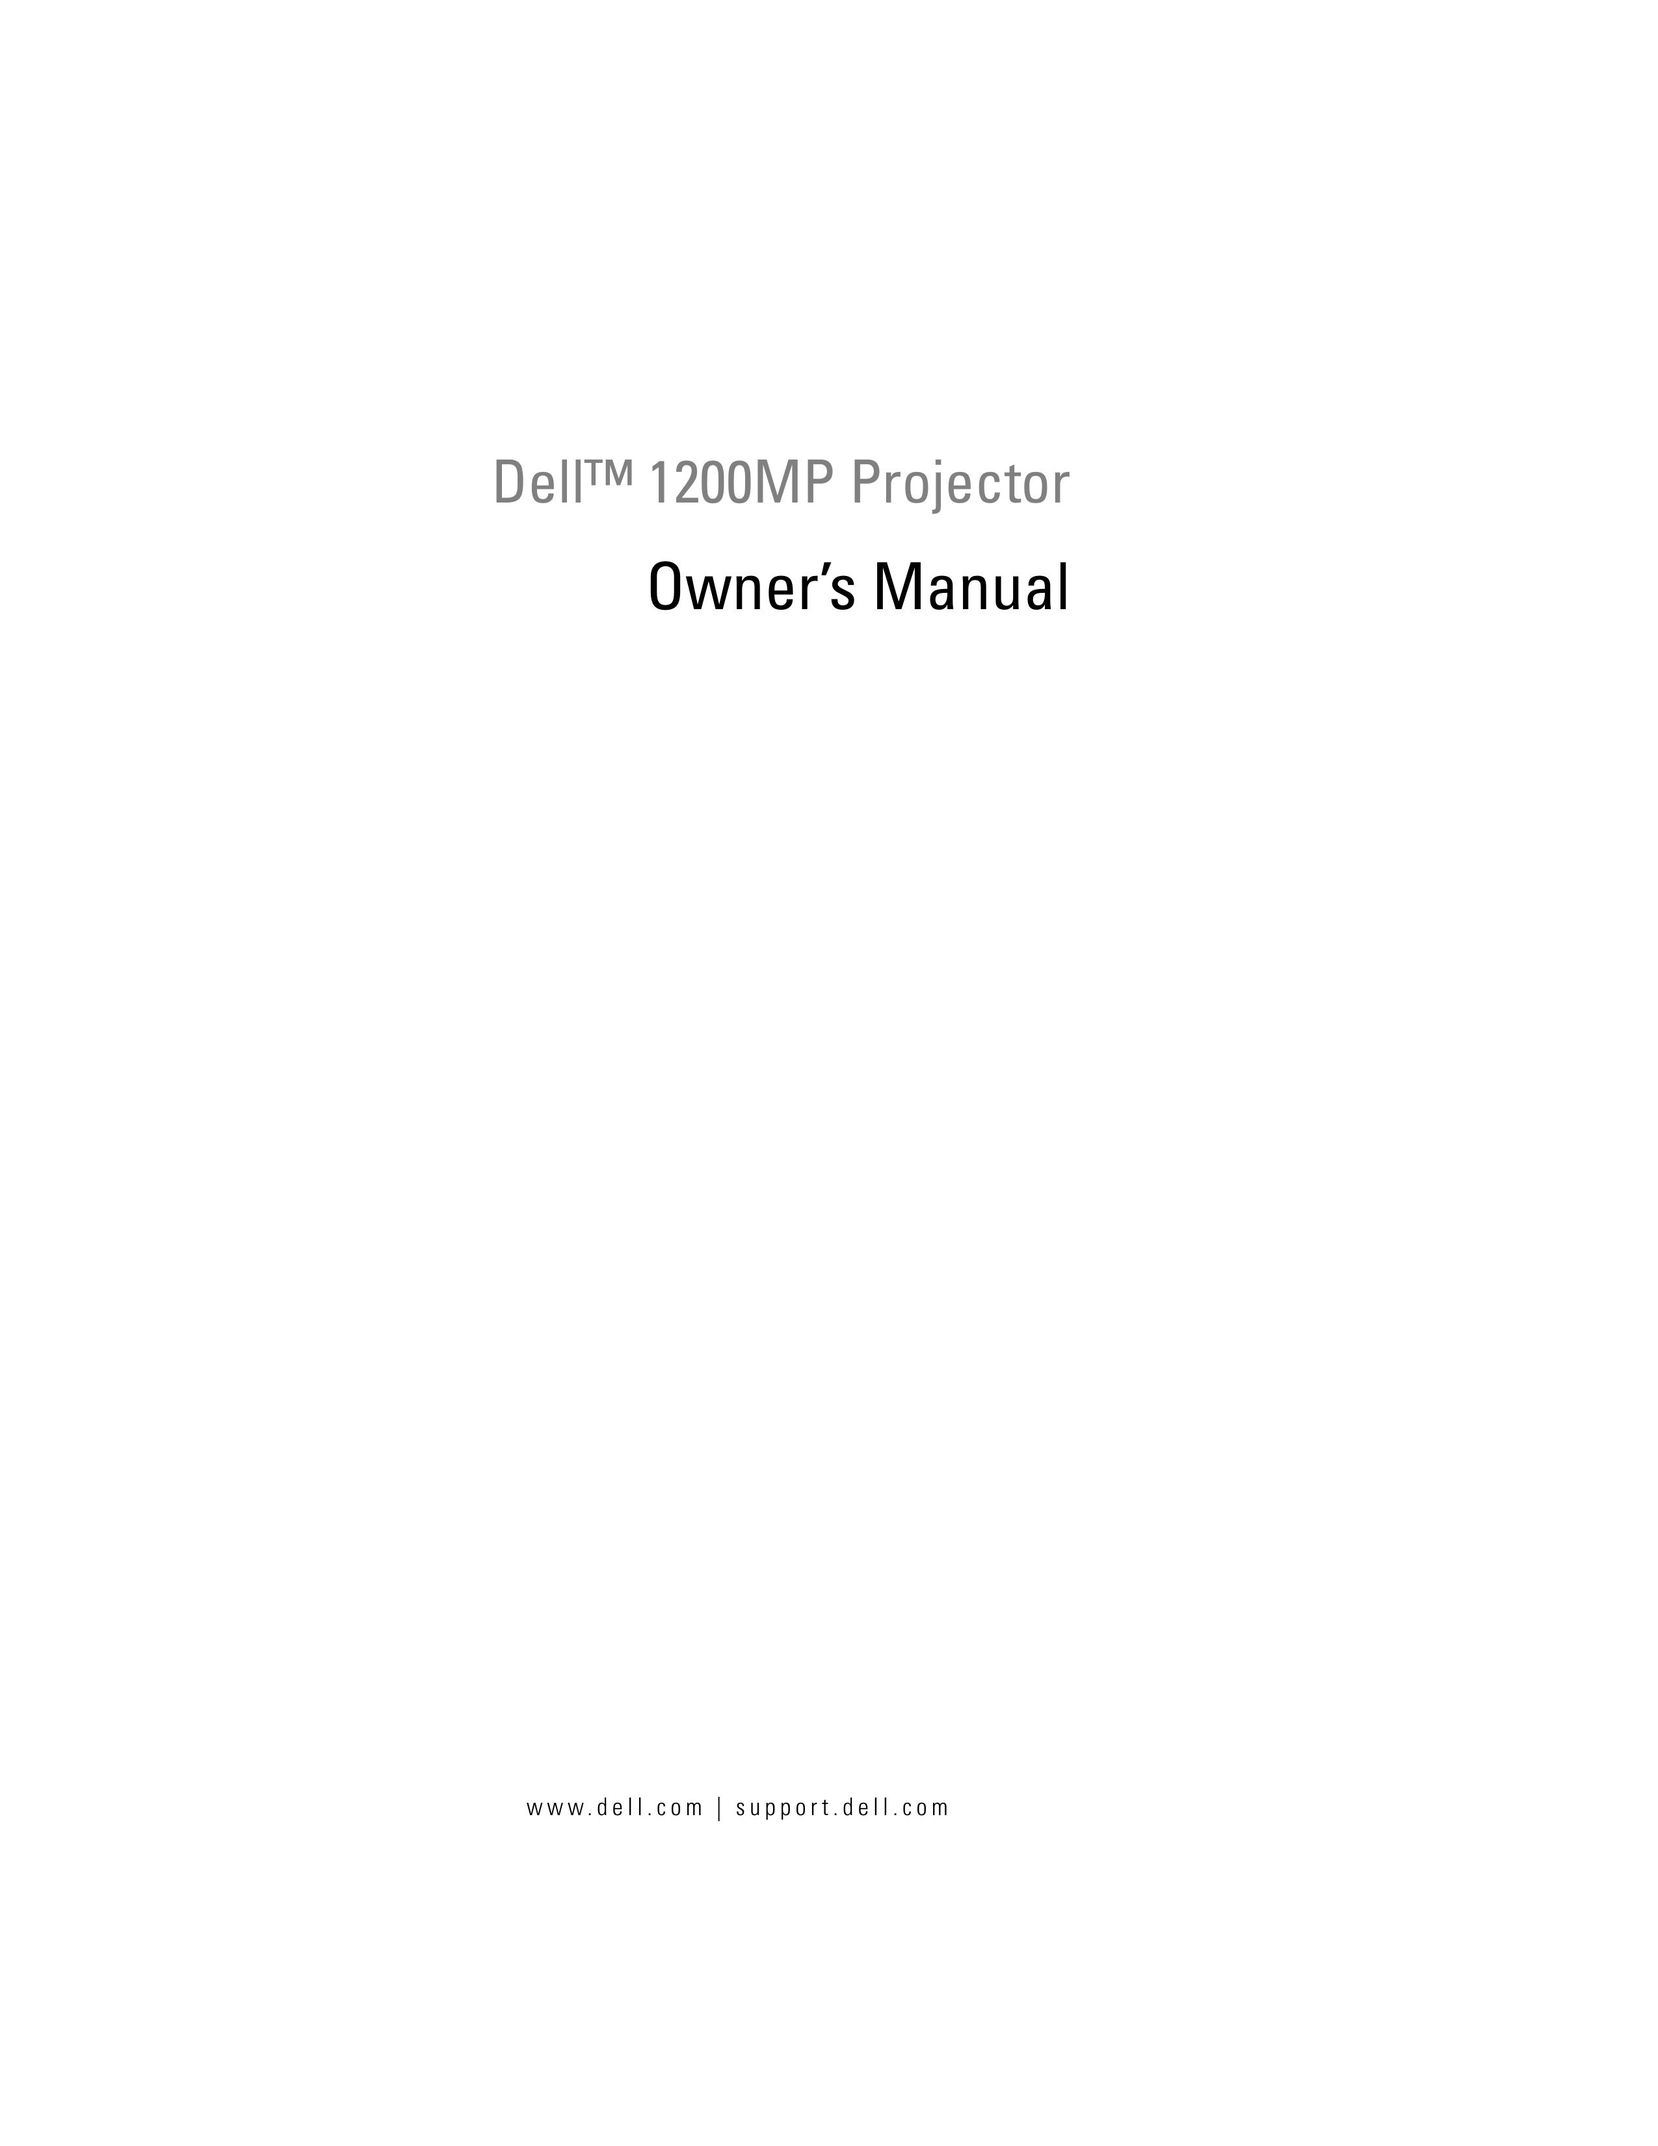 Dell 1200MP Projector User Manual